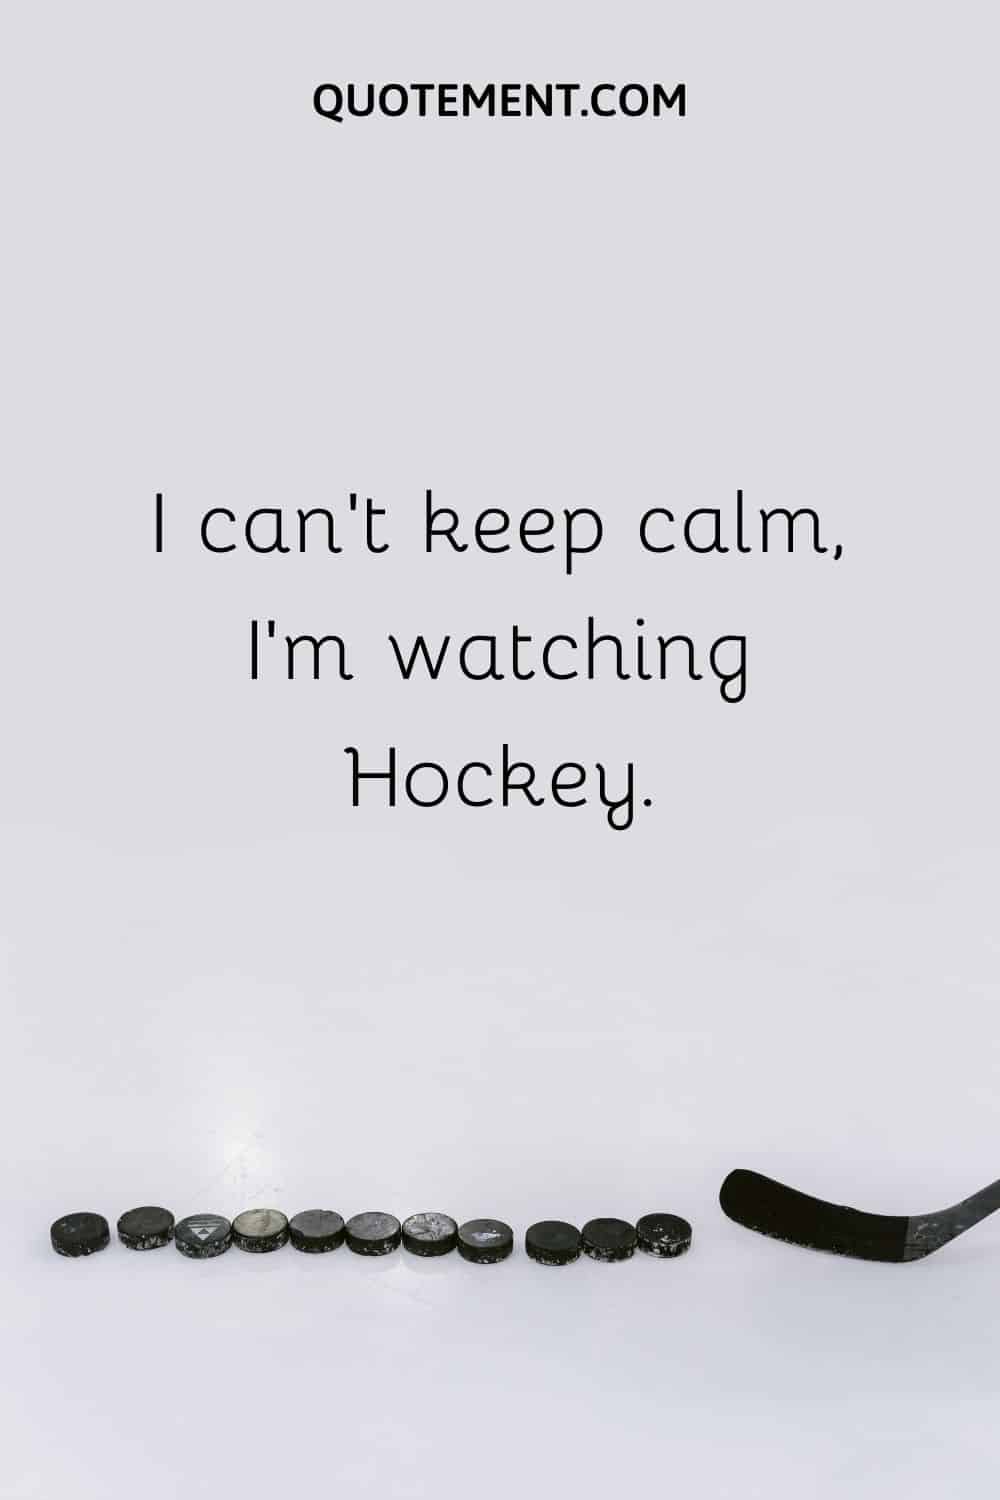 I can’t keep calm, I’m watching Hockey.